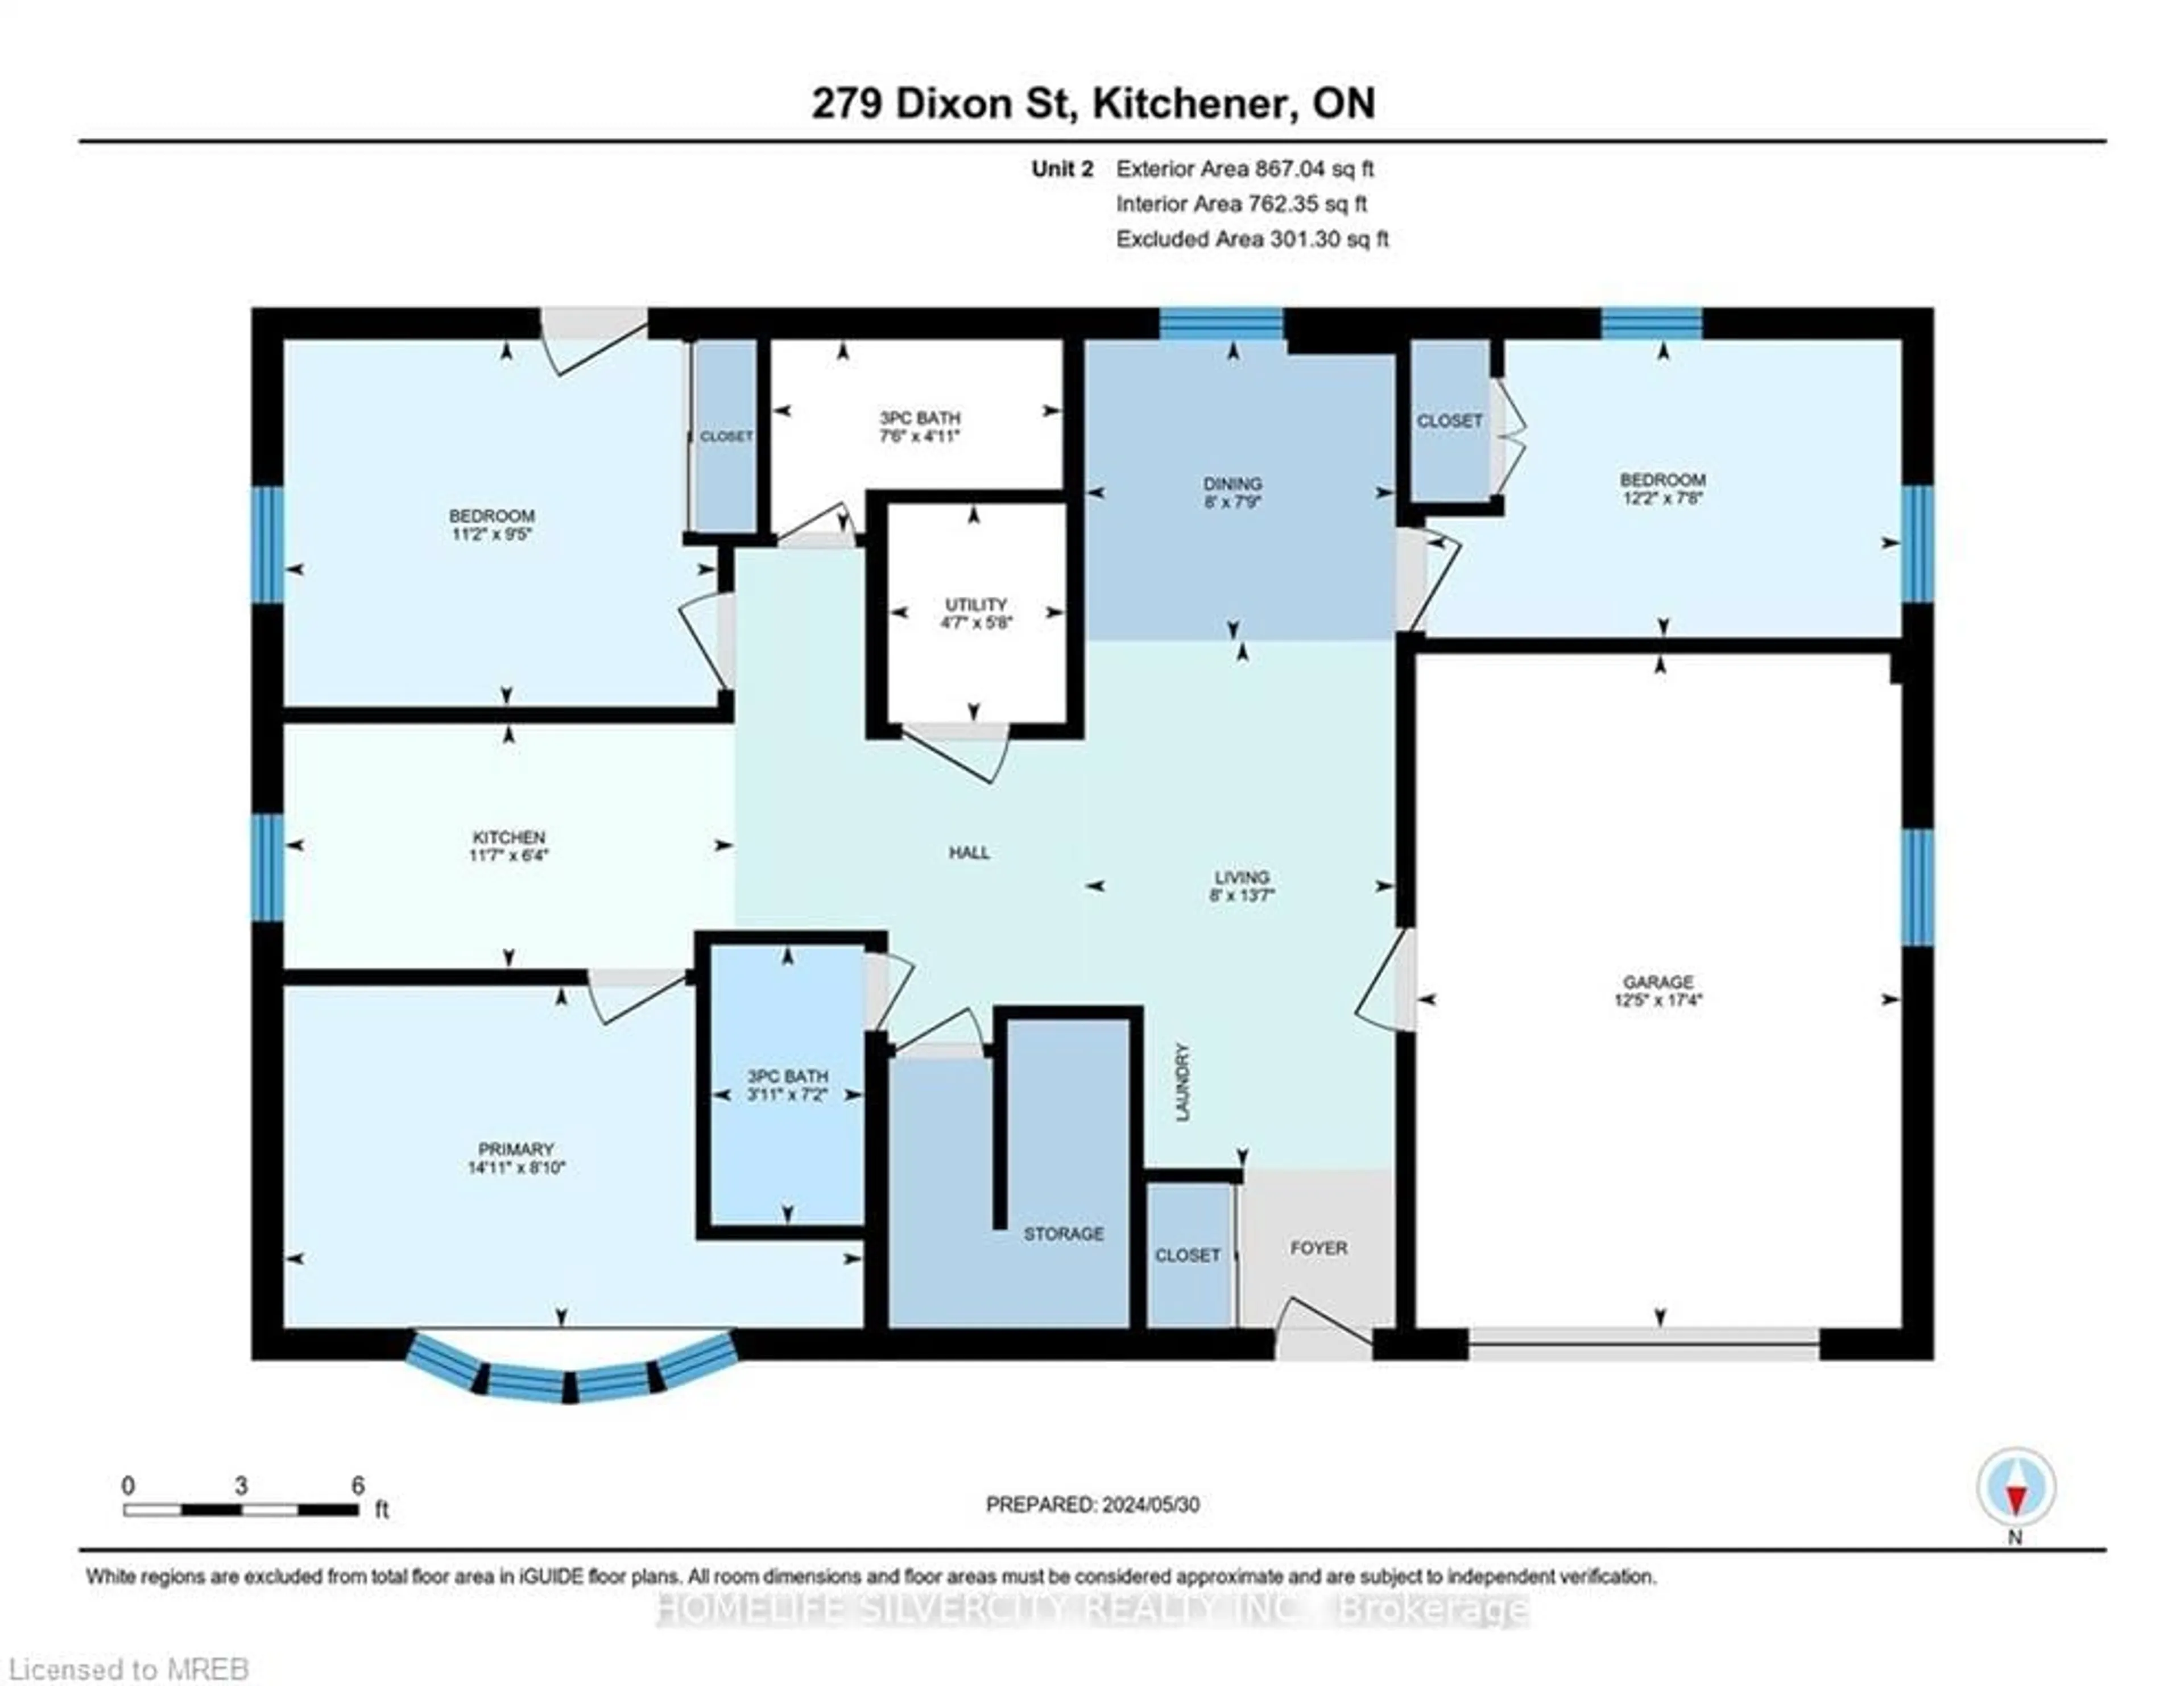 Floor plan for 279 Dixon St, Kitchener Ontario N2G 3G1